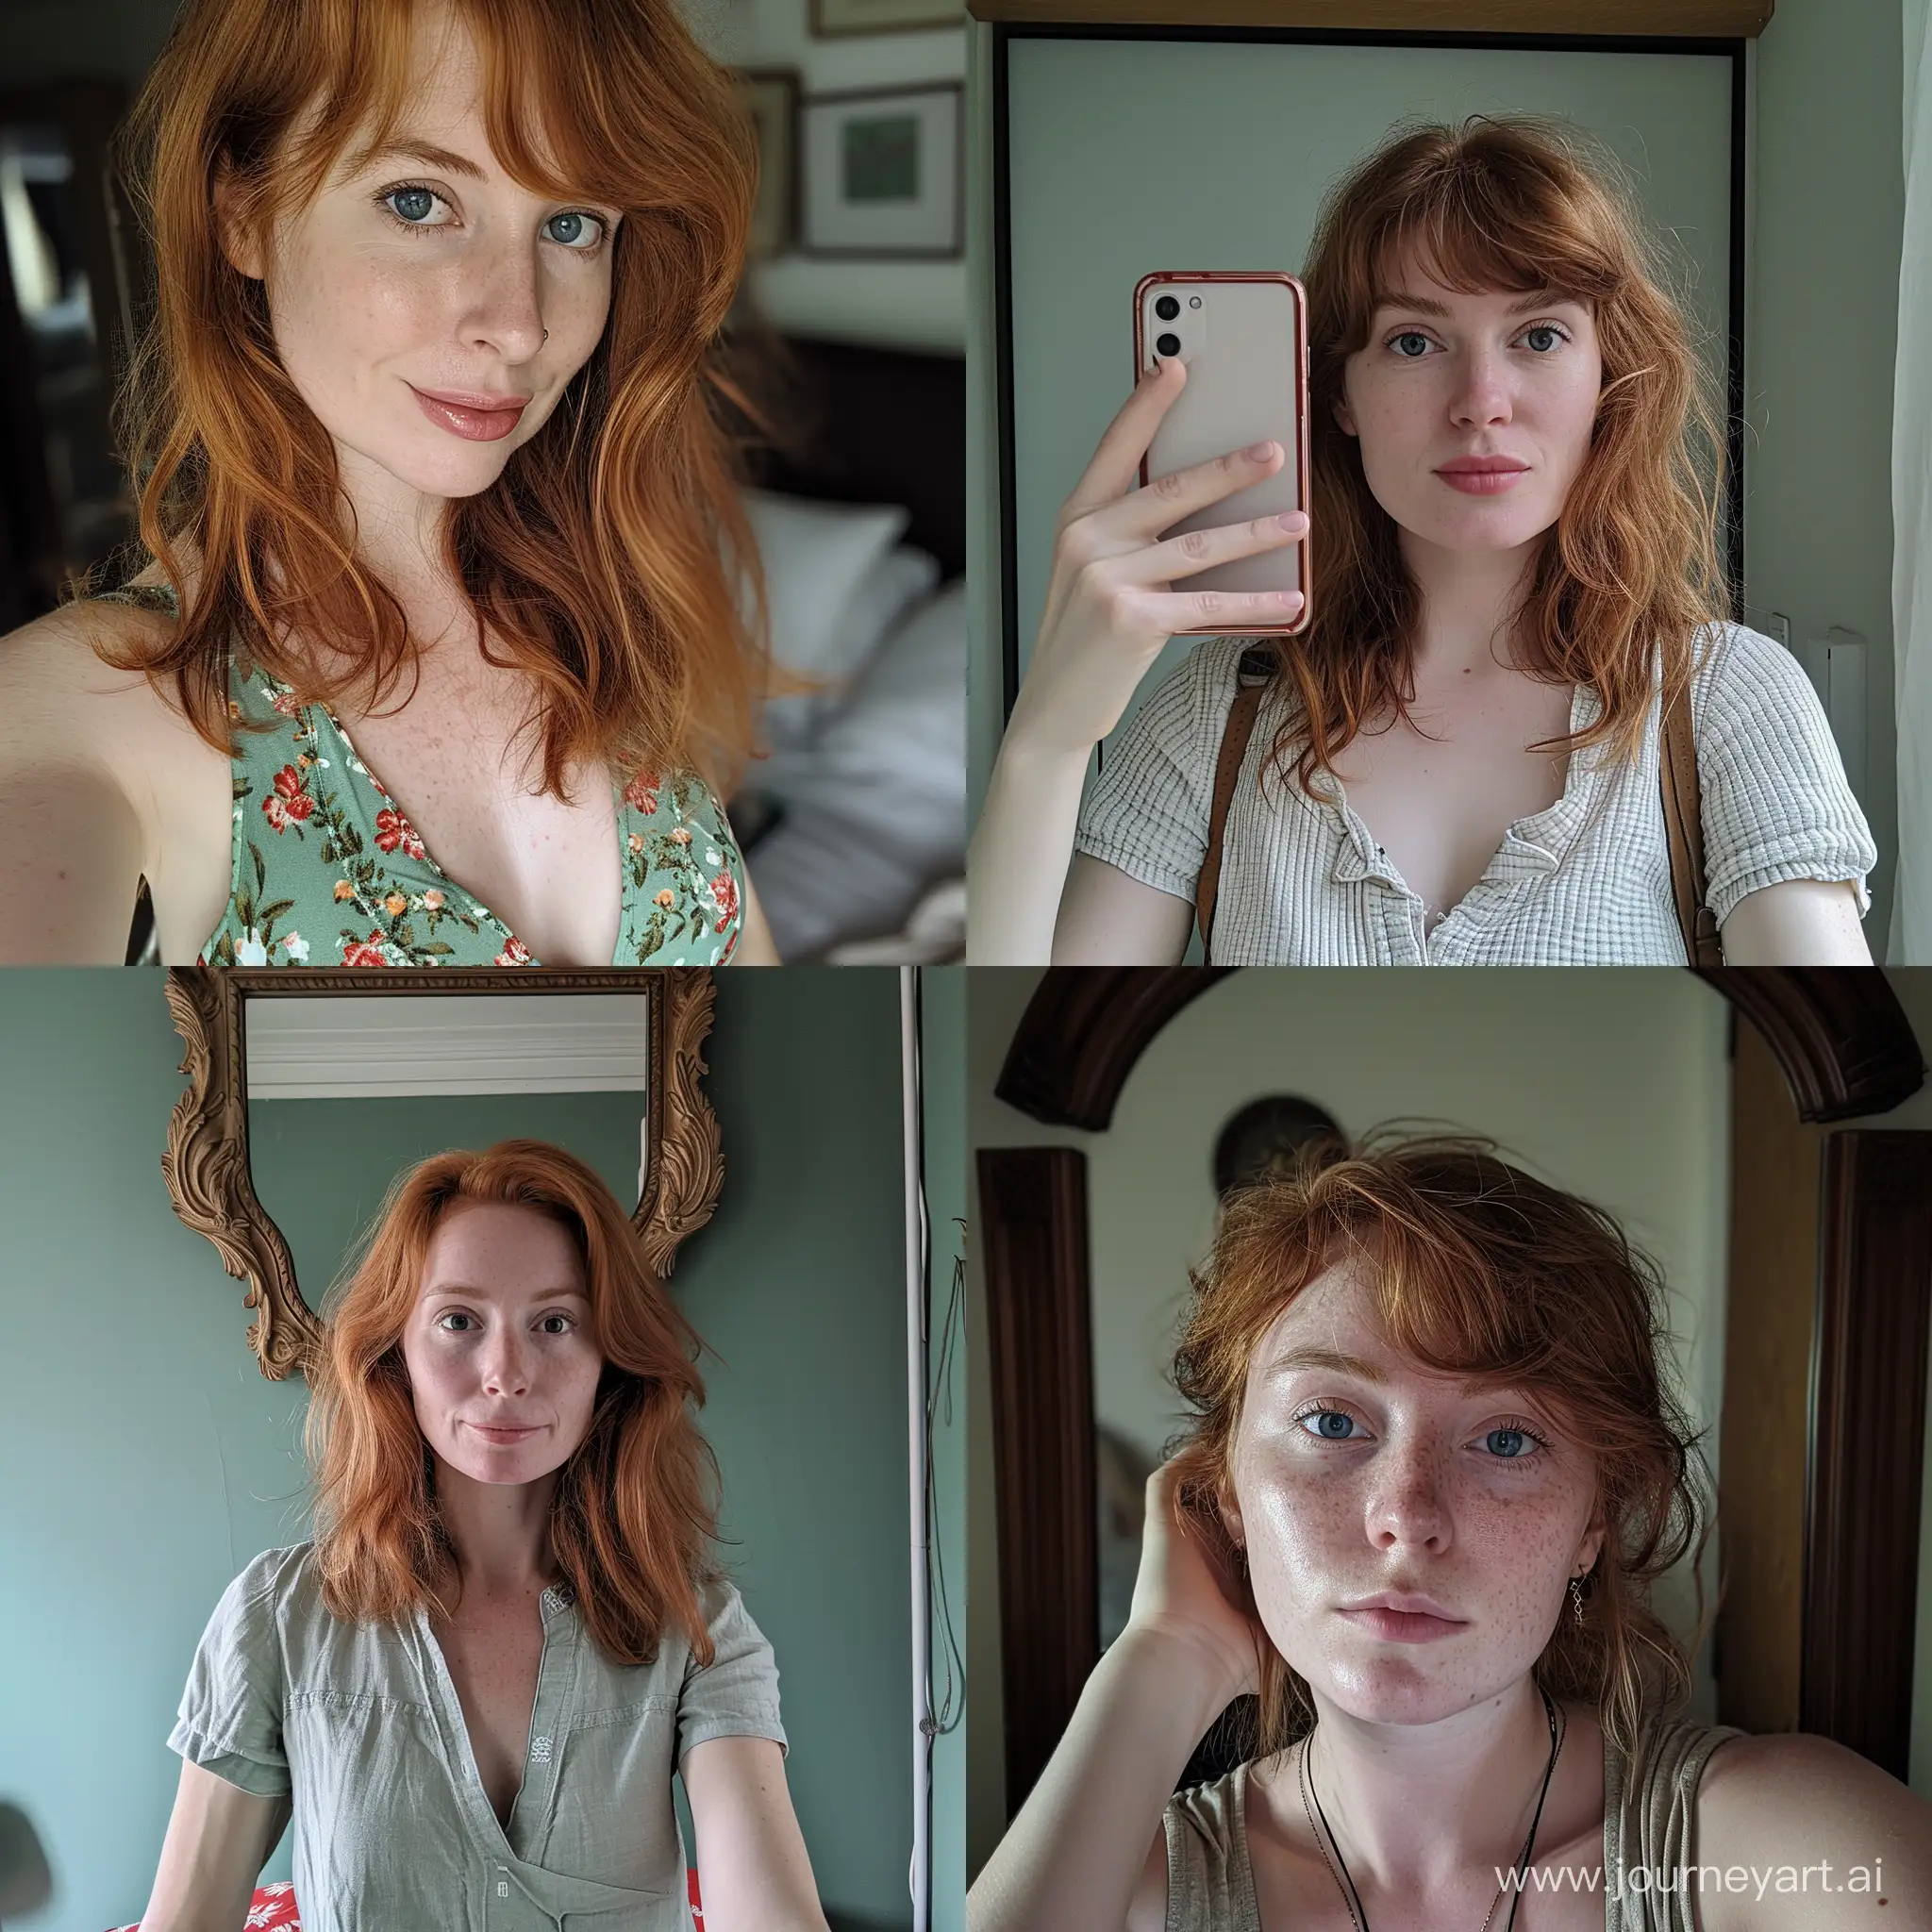 LowQuality-Phone-Selfie-of-Redhead-Woman